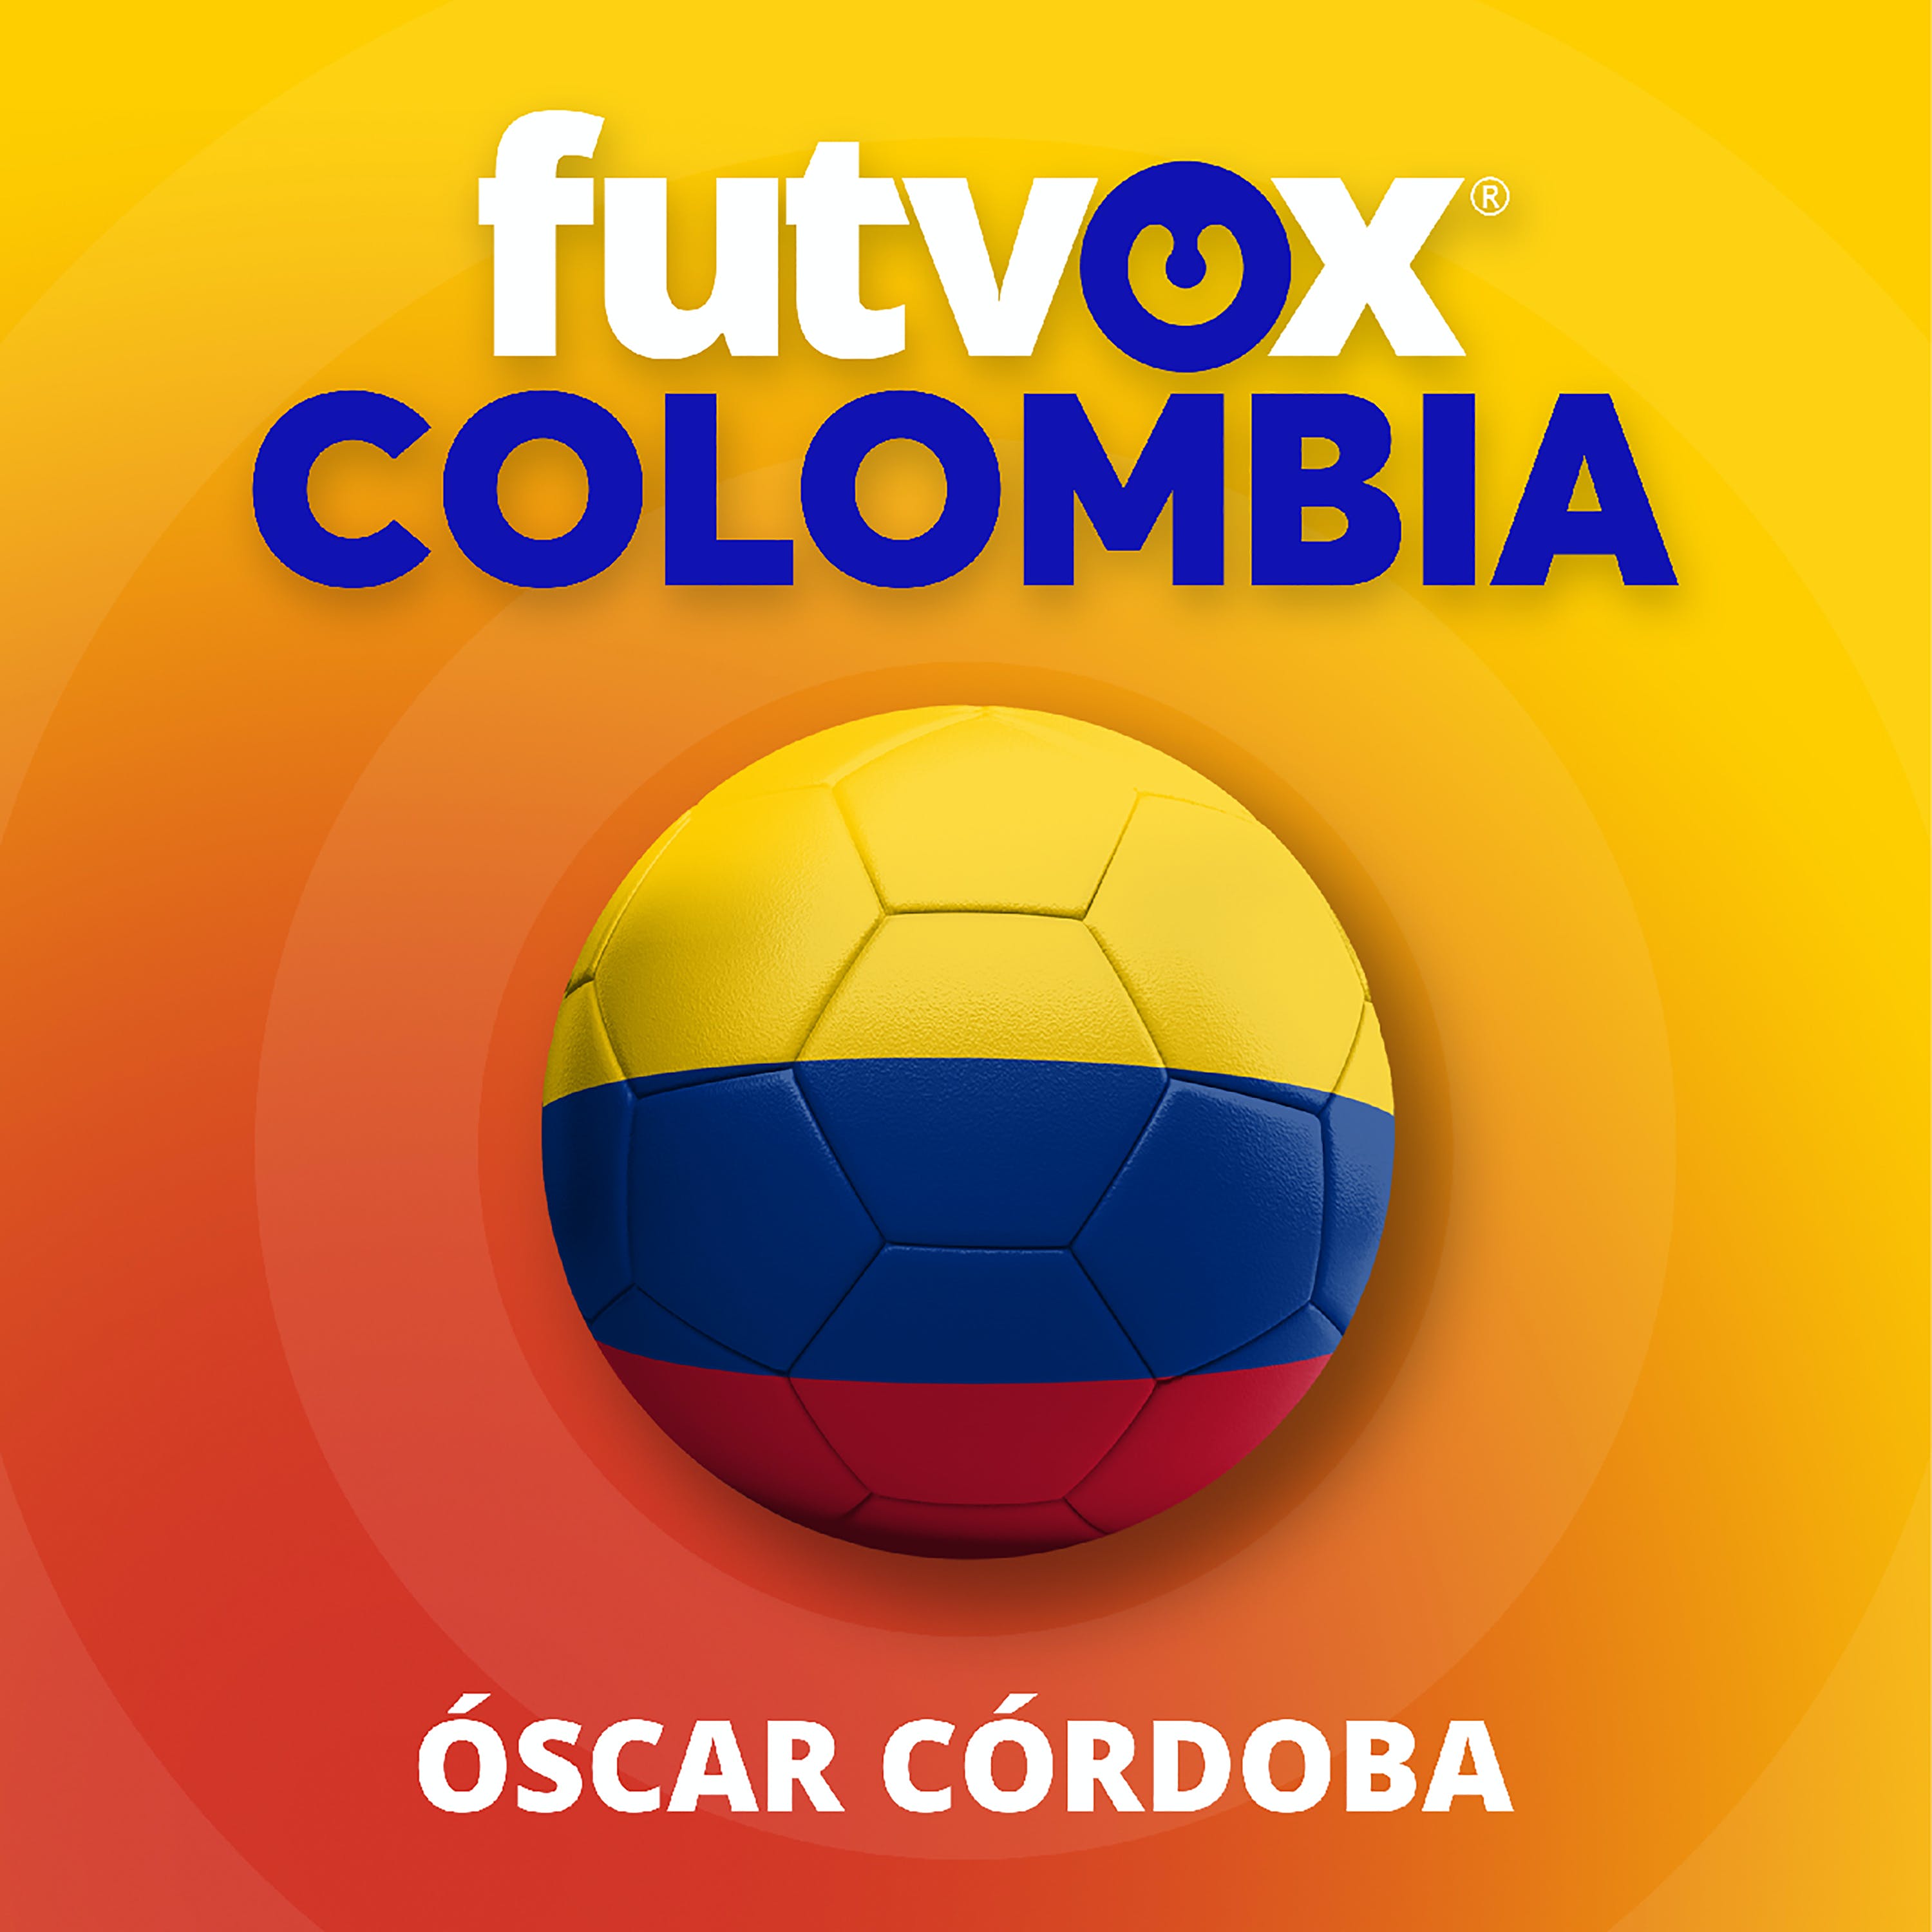 34. Reparten el botín: Colombia vs. Ecuador, Córdoba vs. Aguinaga